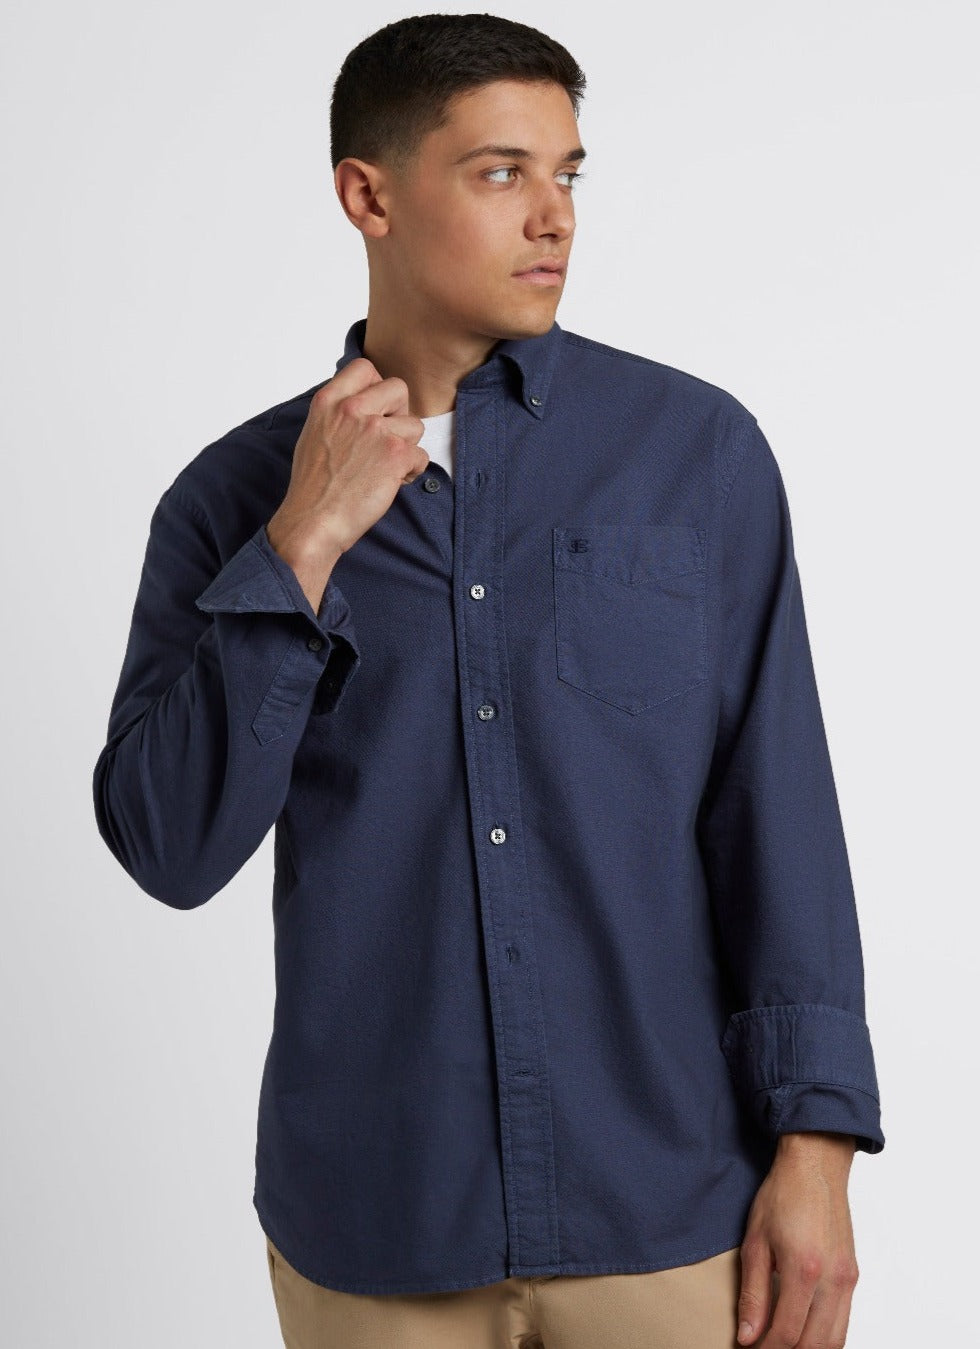 Beatnik Oxford Garment Dye Shirt - Indigo